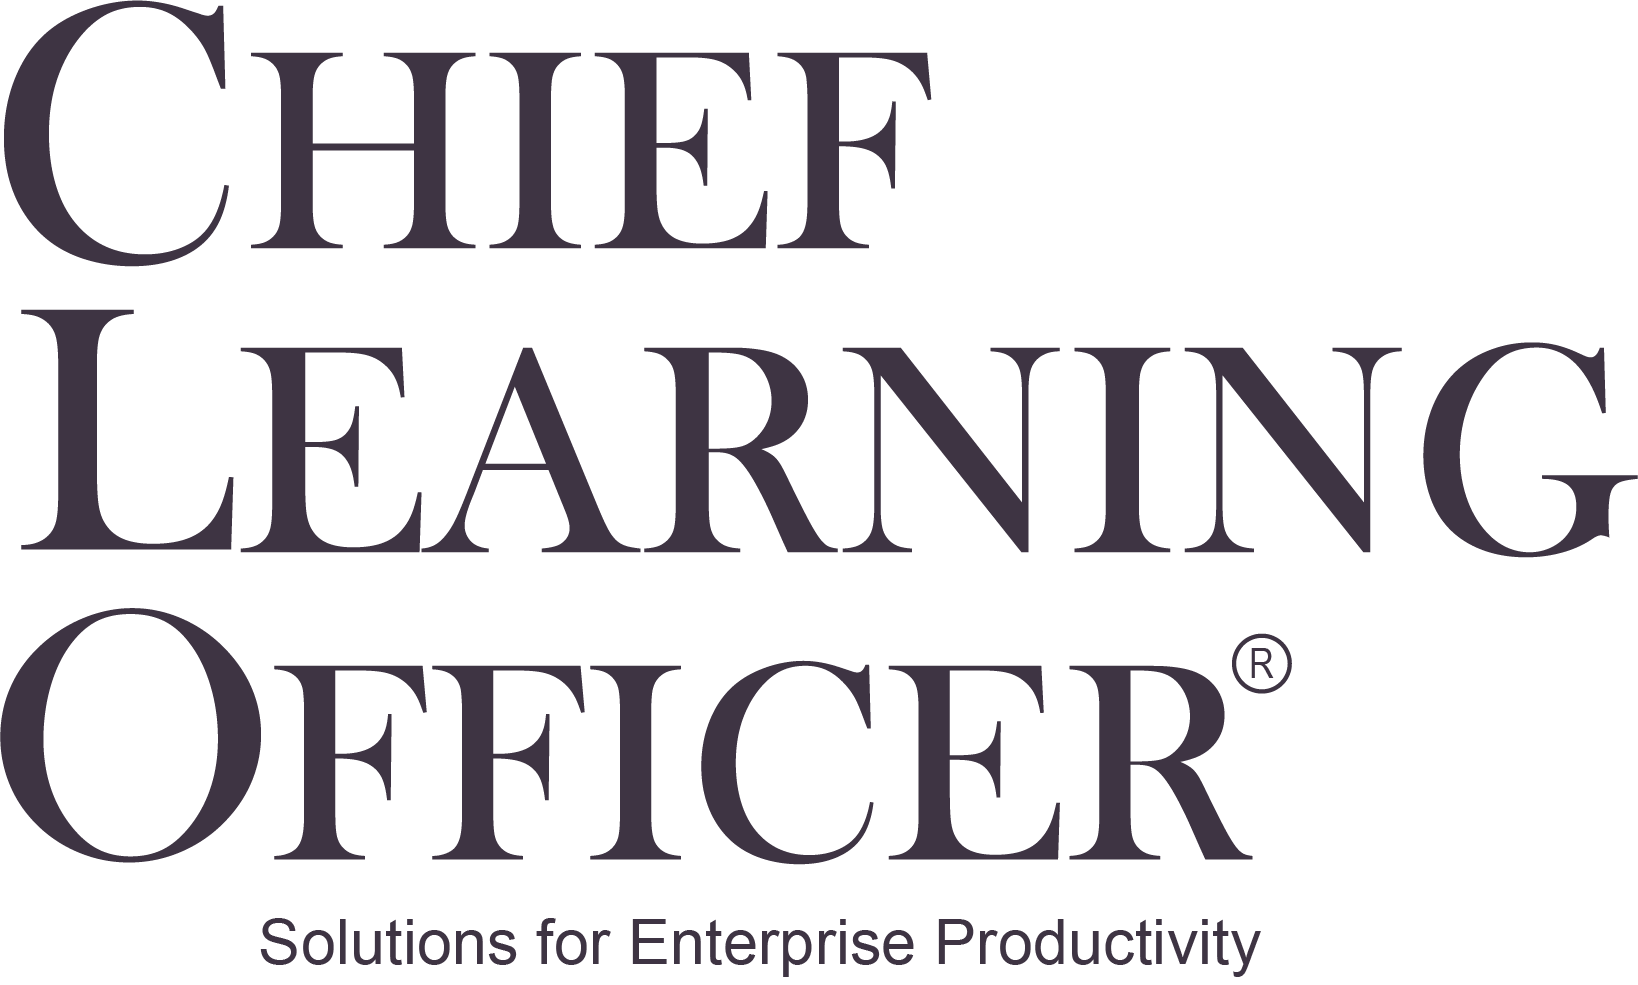 chieflearningofficer logo (1)